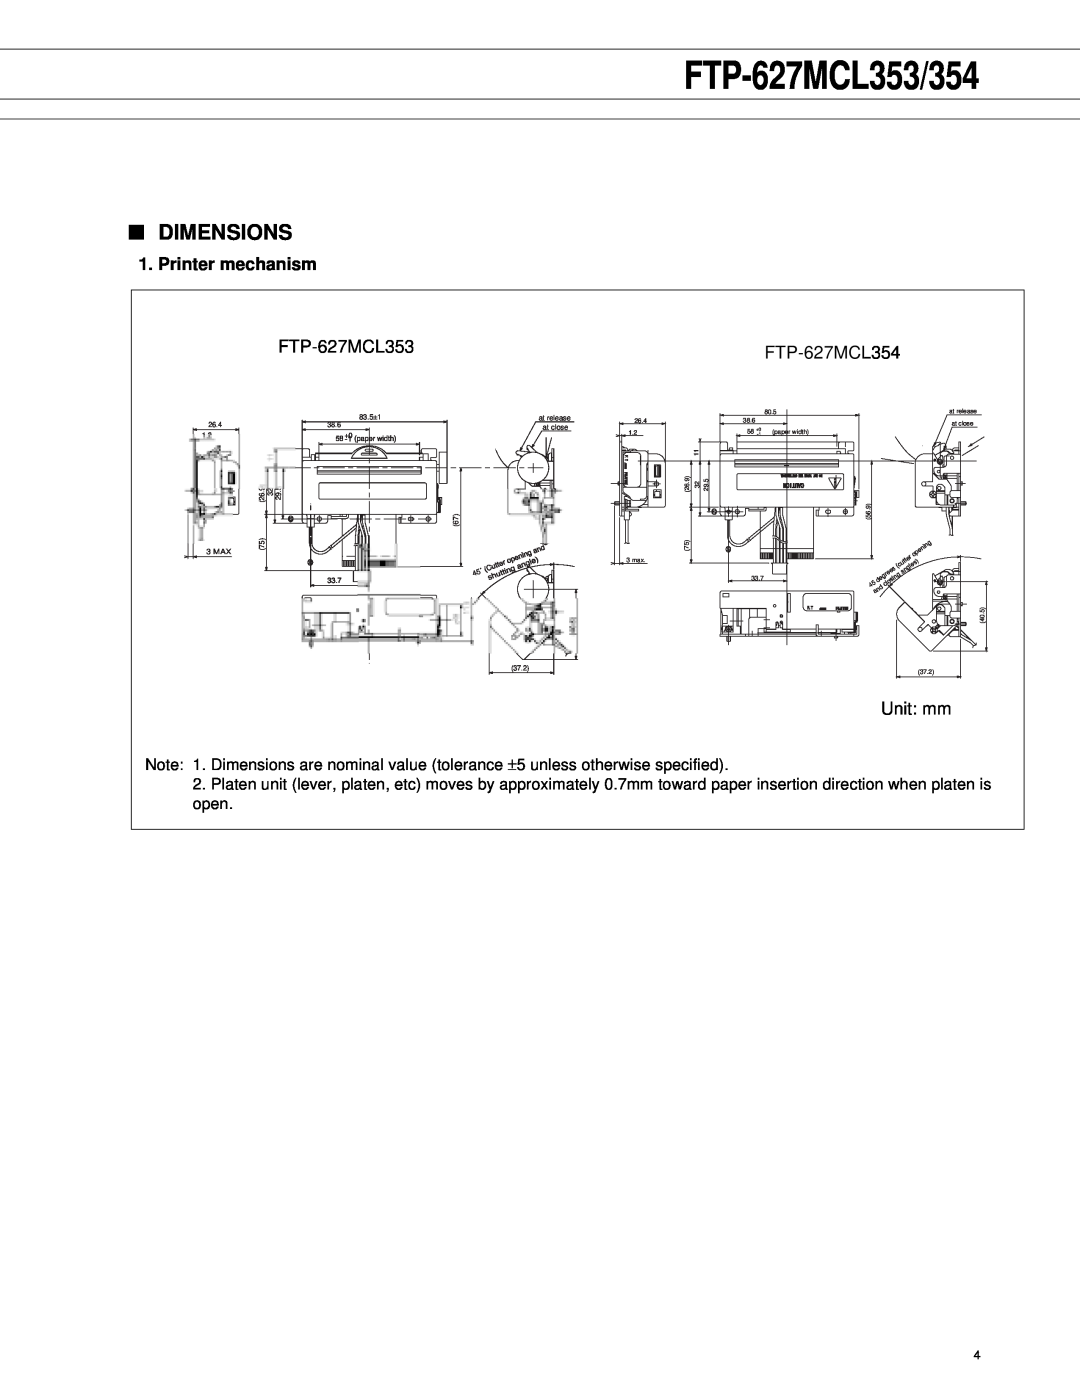 Fujitsu FTP-627MCL354 manual Dimensions, Printer mechanism, FTP-627MCL353/354 